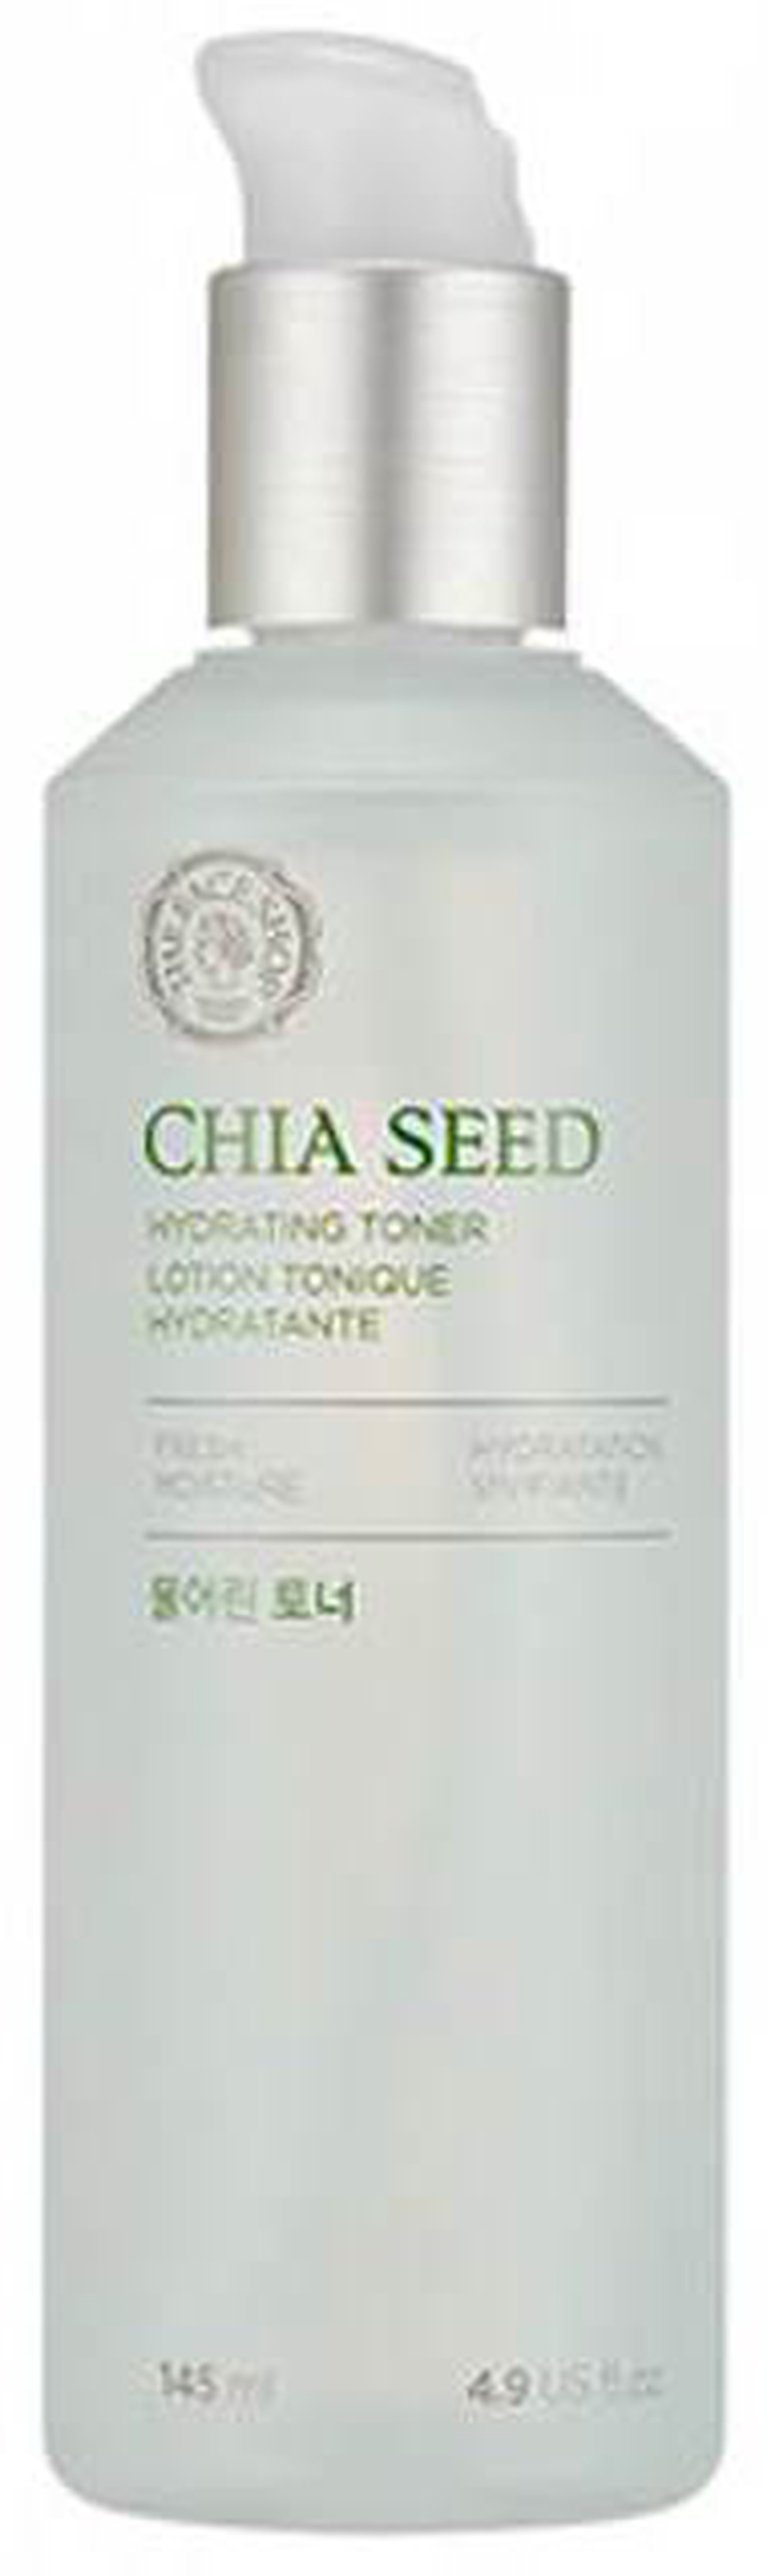 The Face Shop Увлажняющий лосьон с экстрактом семян чиа Chia Seed Hydrating Lotion 145ml фото